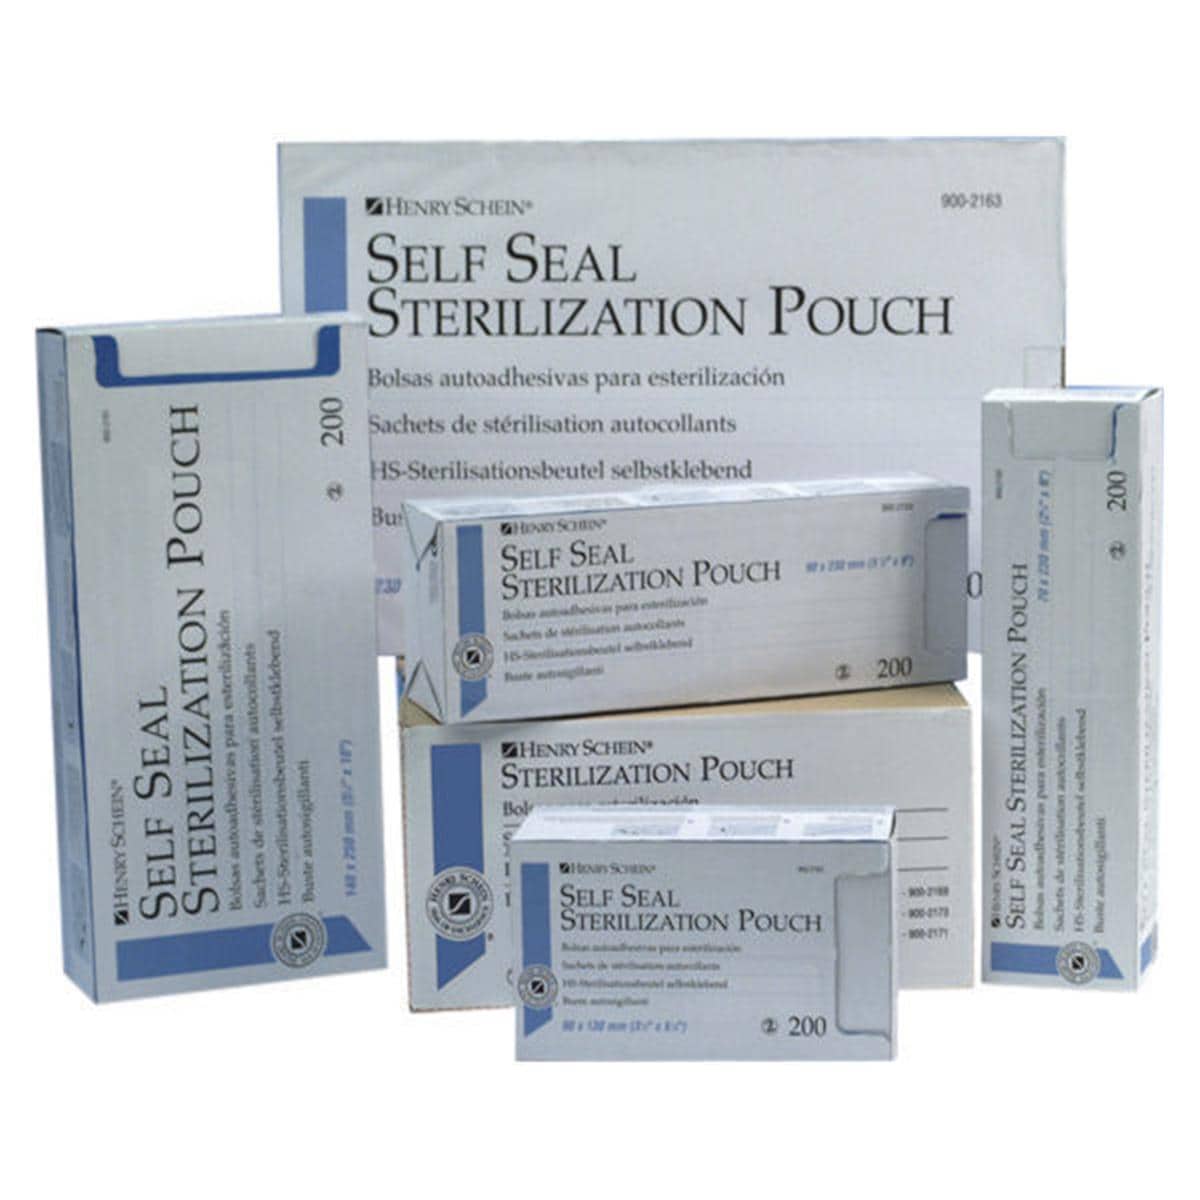 HS-Sterilisationsbeutel selbstklebend, Self seal Sterilisation Pouch - Größe 83 x 159 mm, Packung 200 Stück